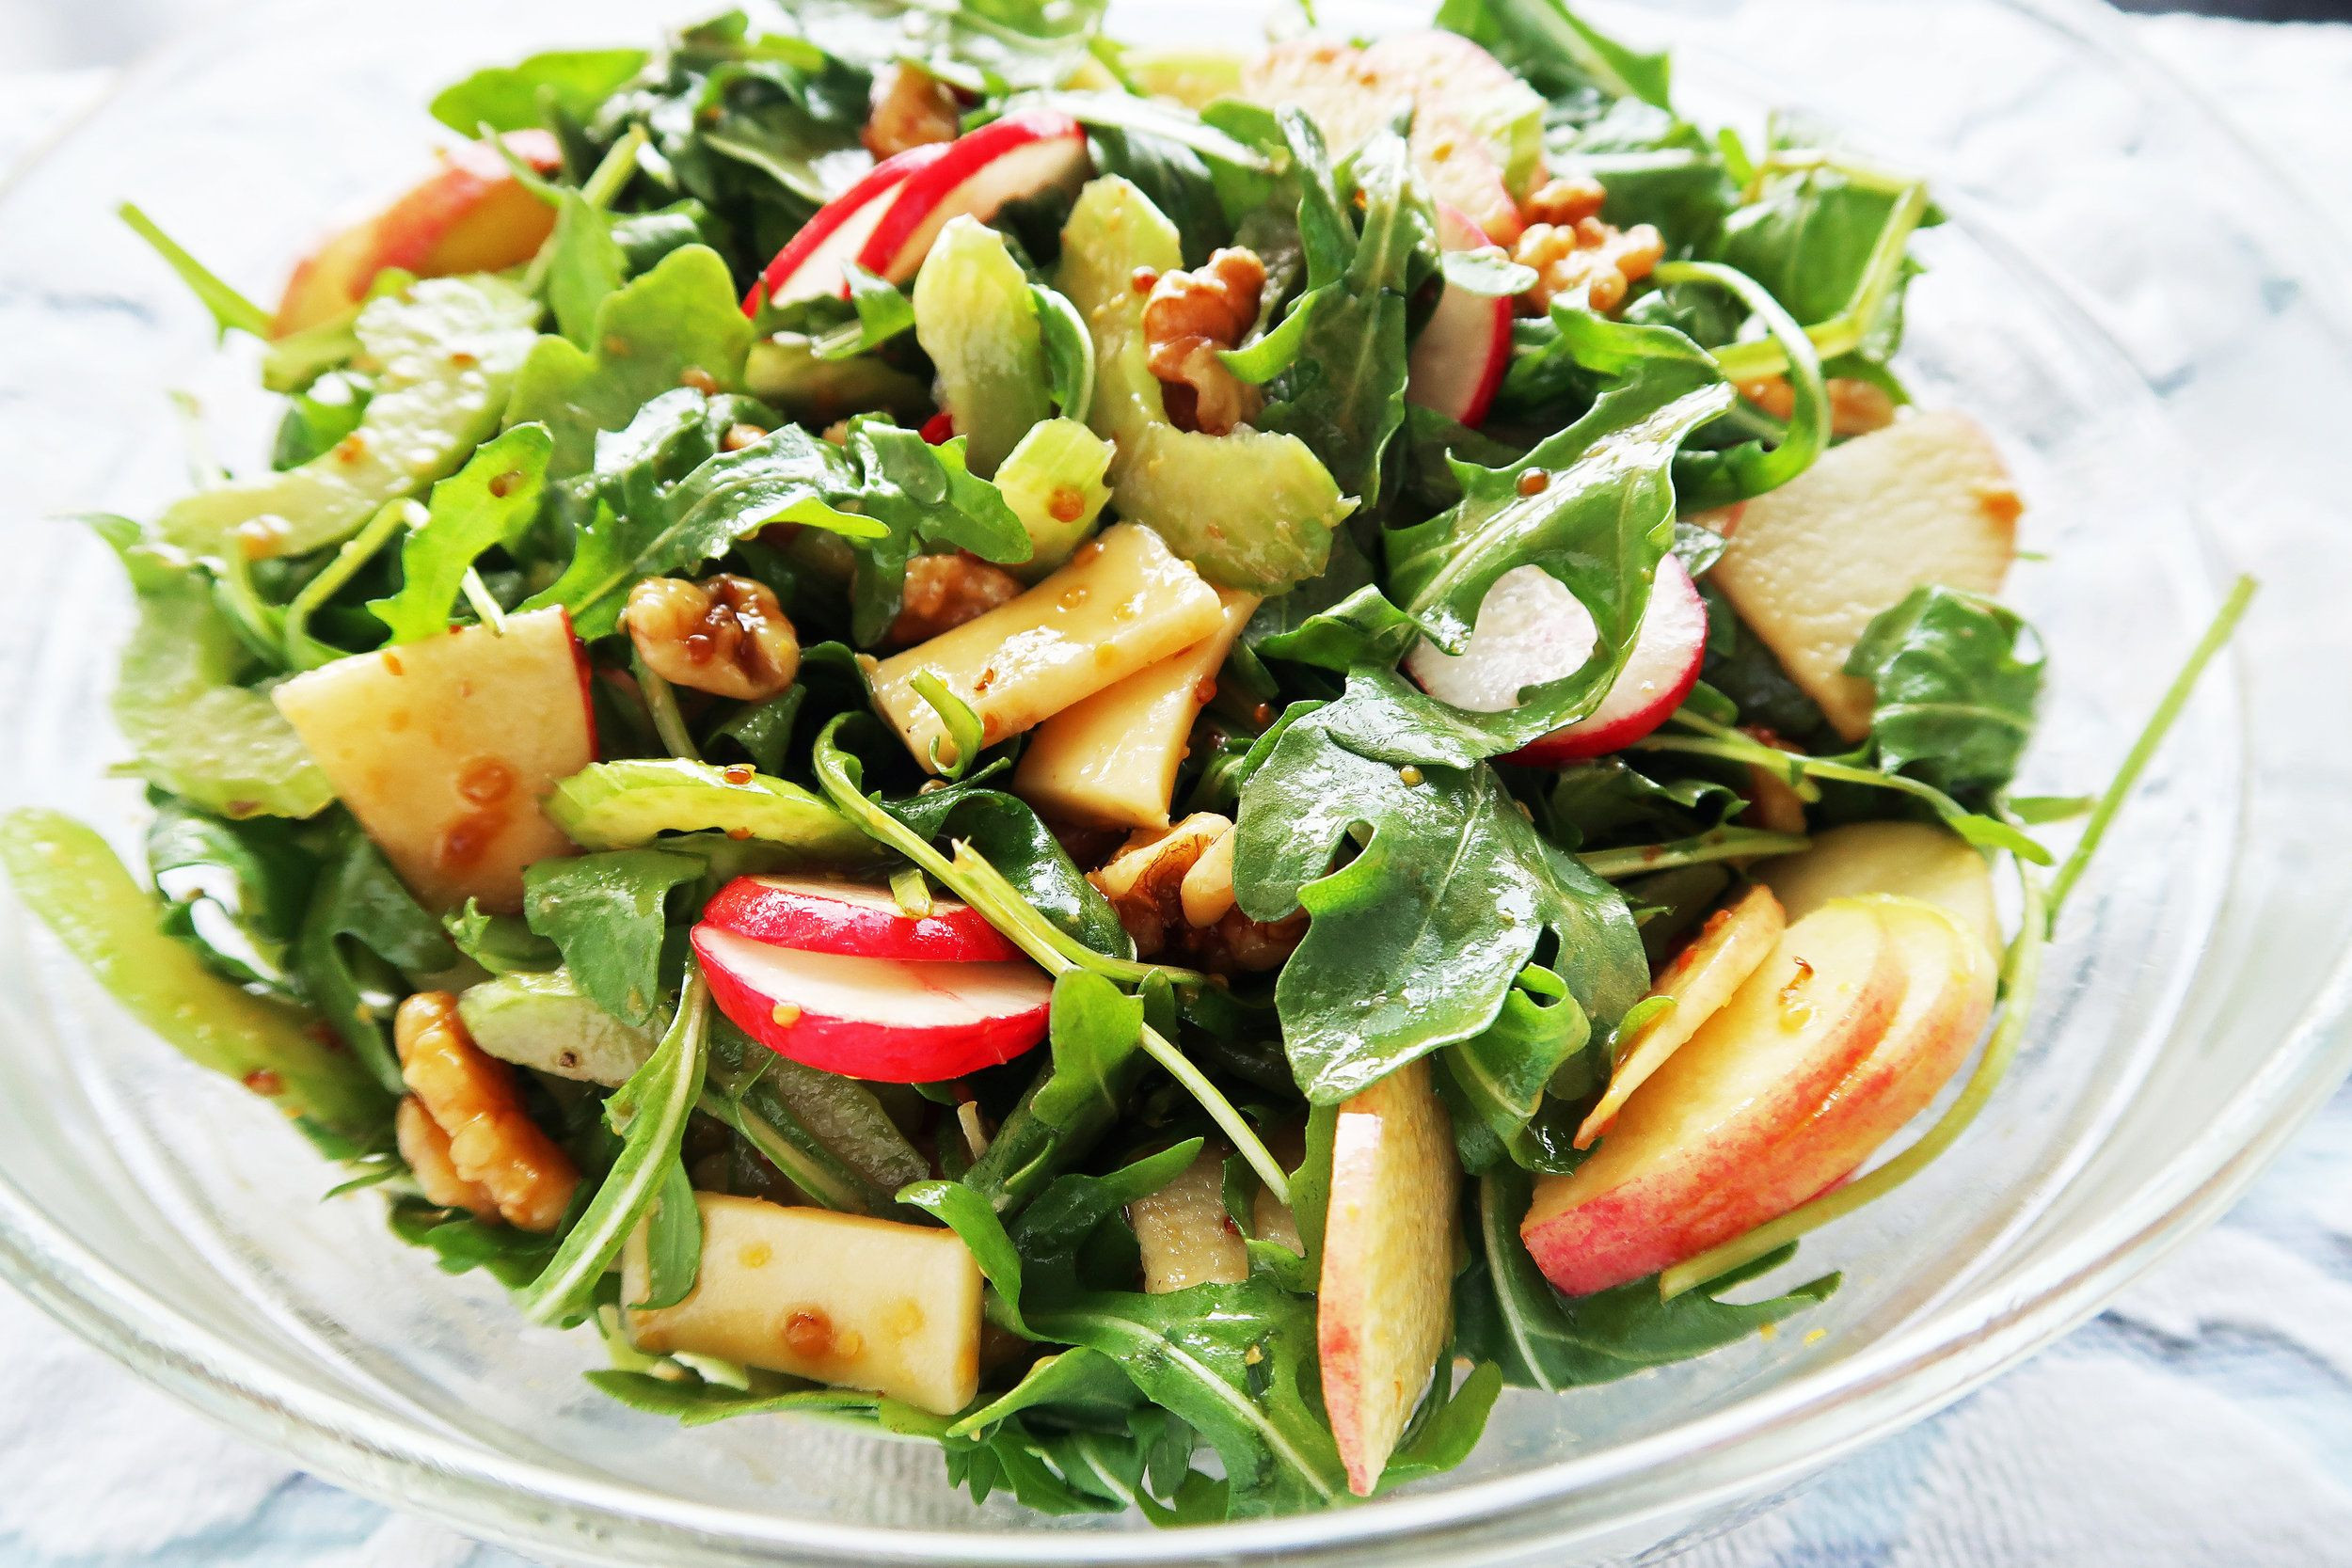 Heart Healthy Winter Recipes
 Crunchy Winter Salad with Balsamic Honey Mustard Dressing